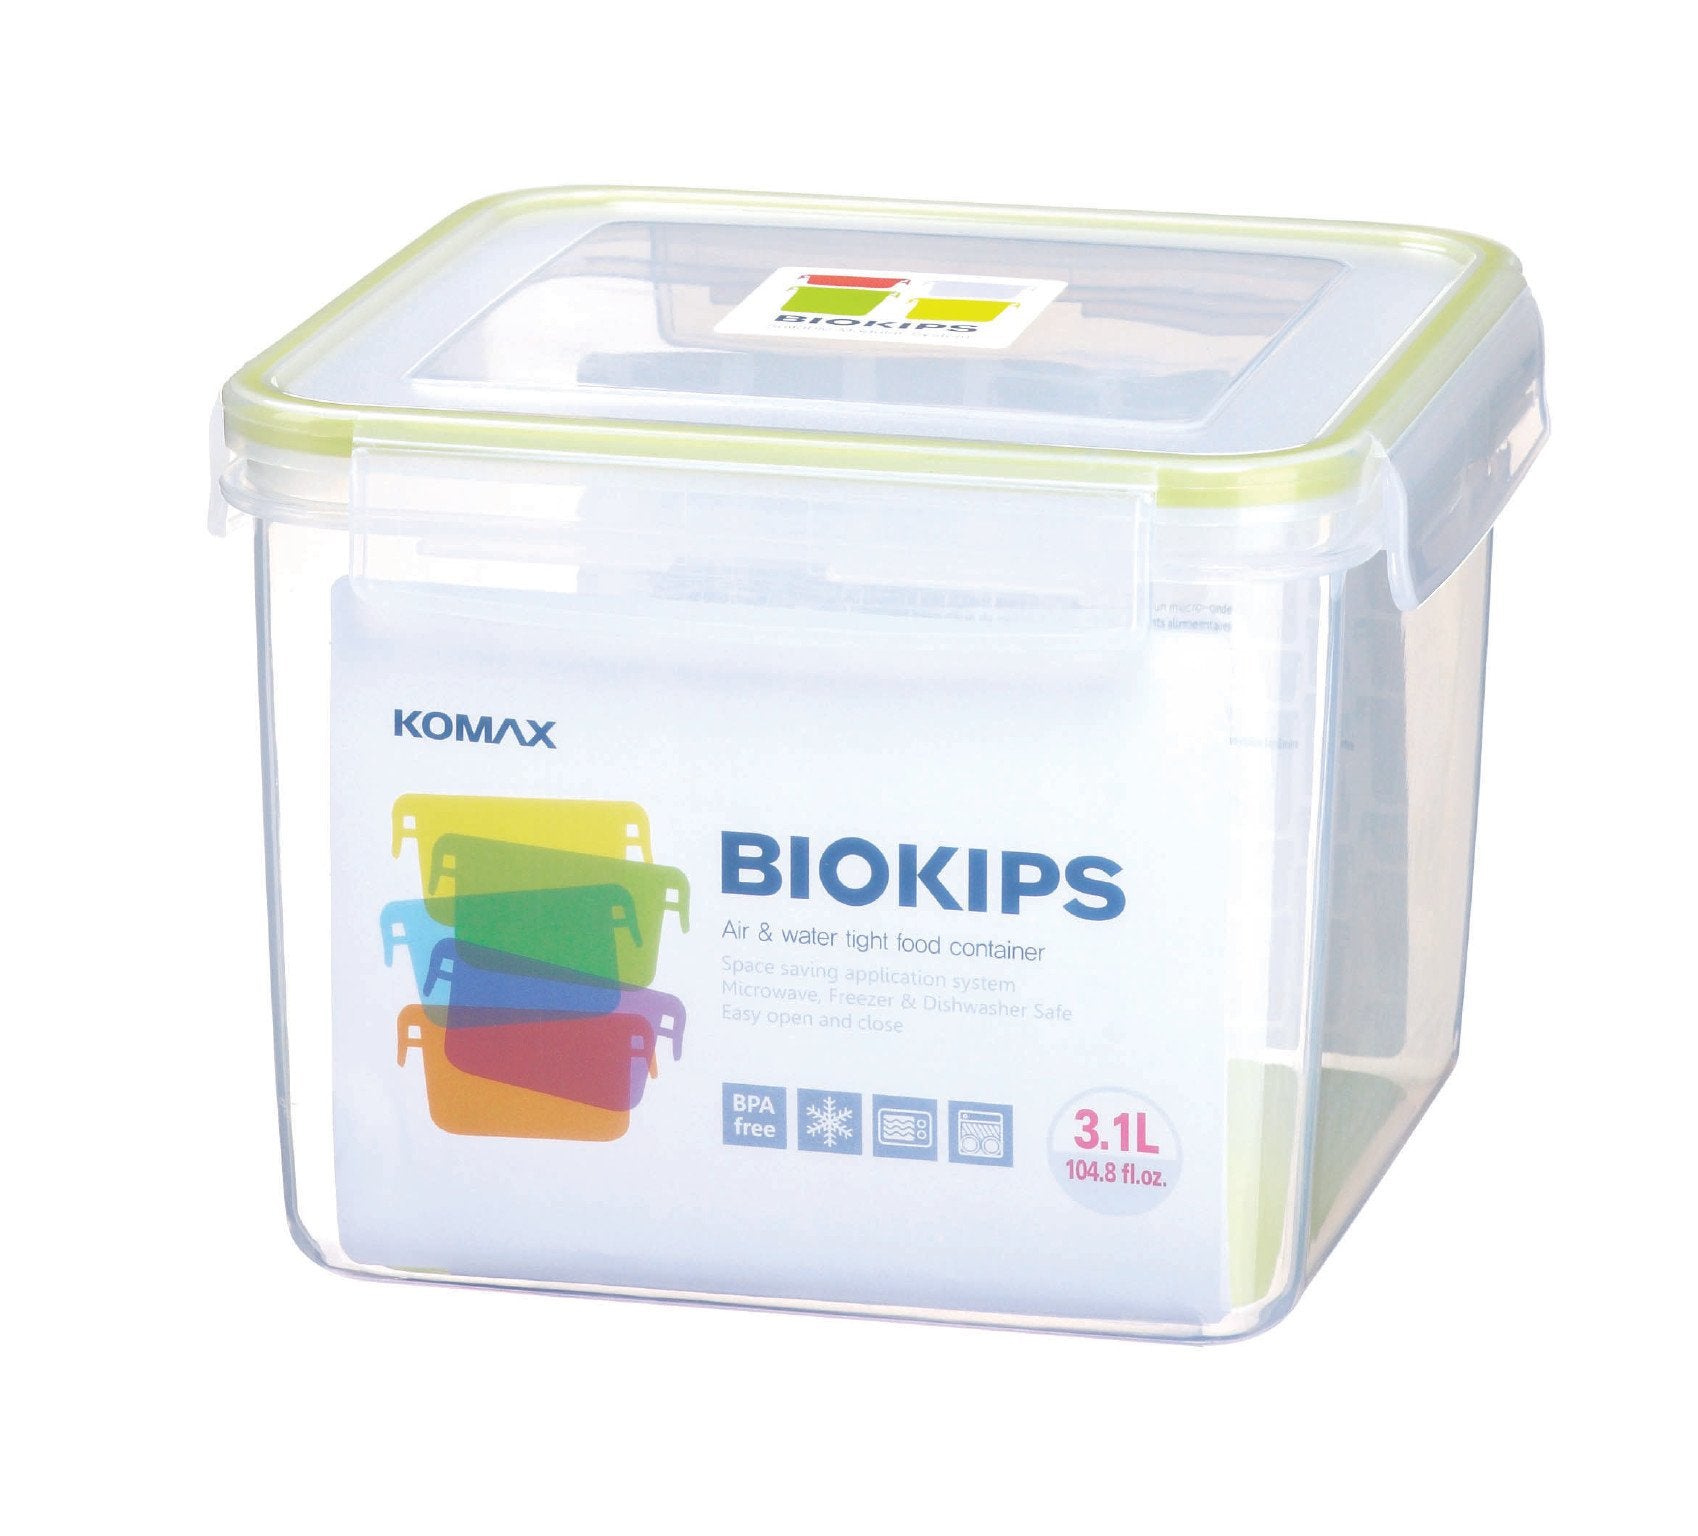 Komax Biokips Square Food Storage Container, 3.1 L